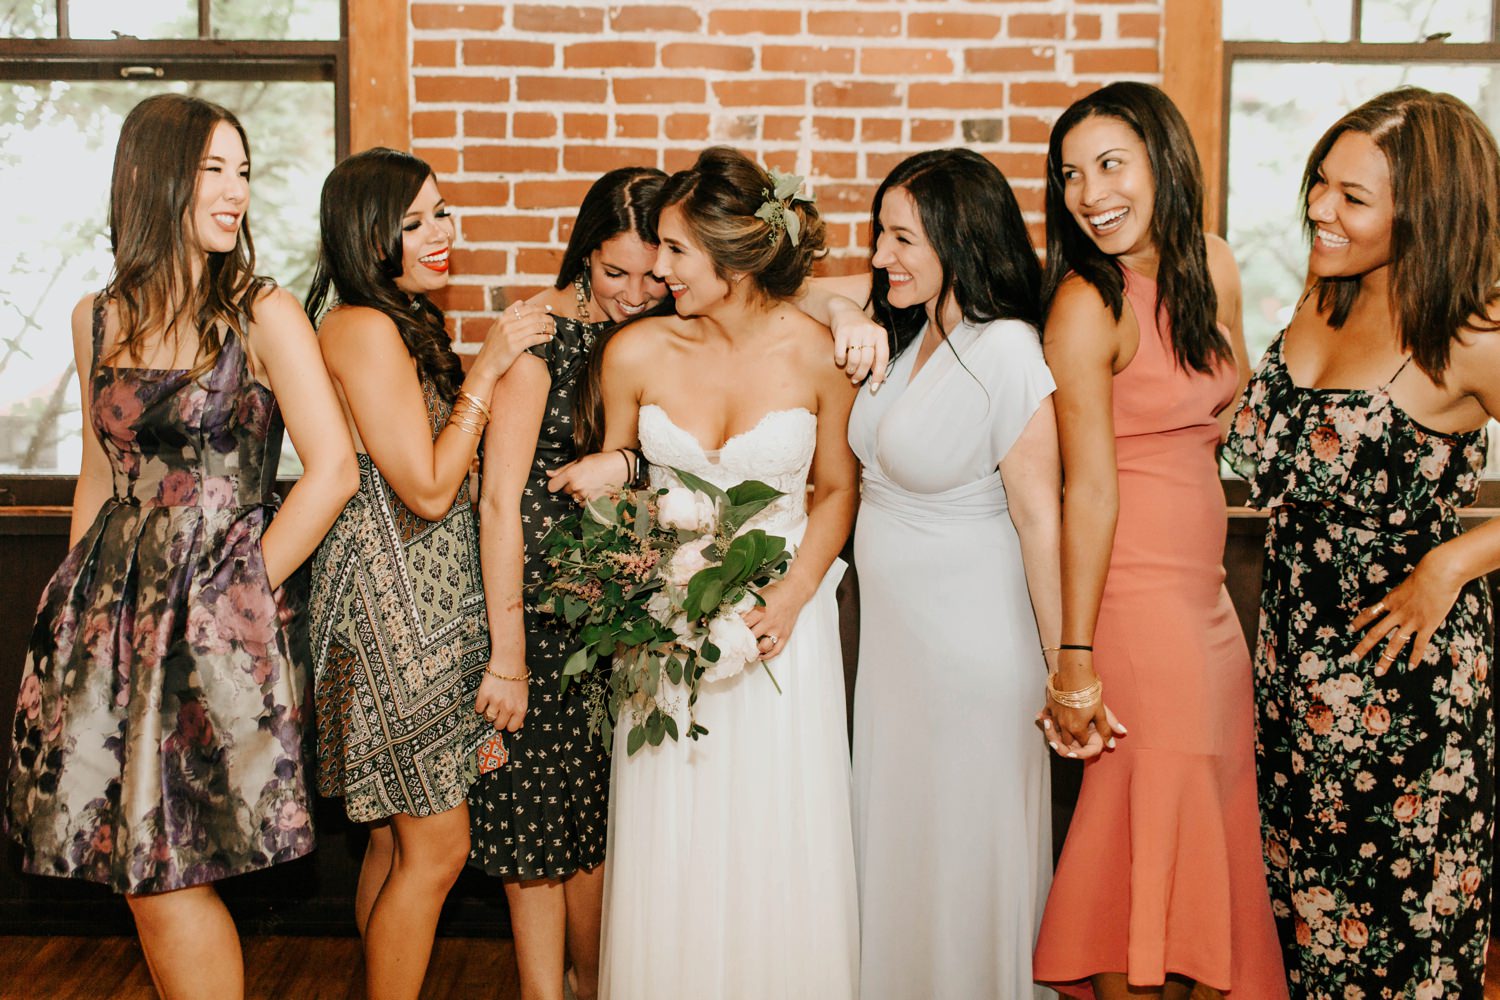 Portland Oregon Wedding Photographer | https://alexandriamonette.com